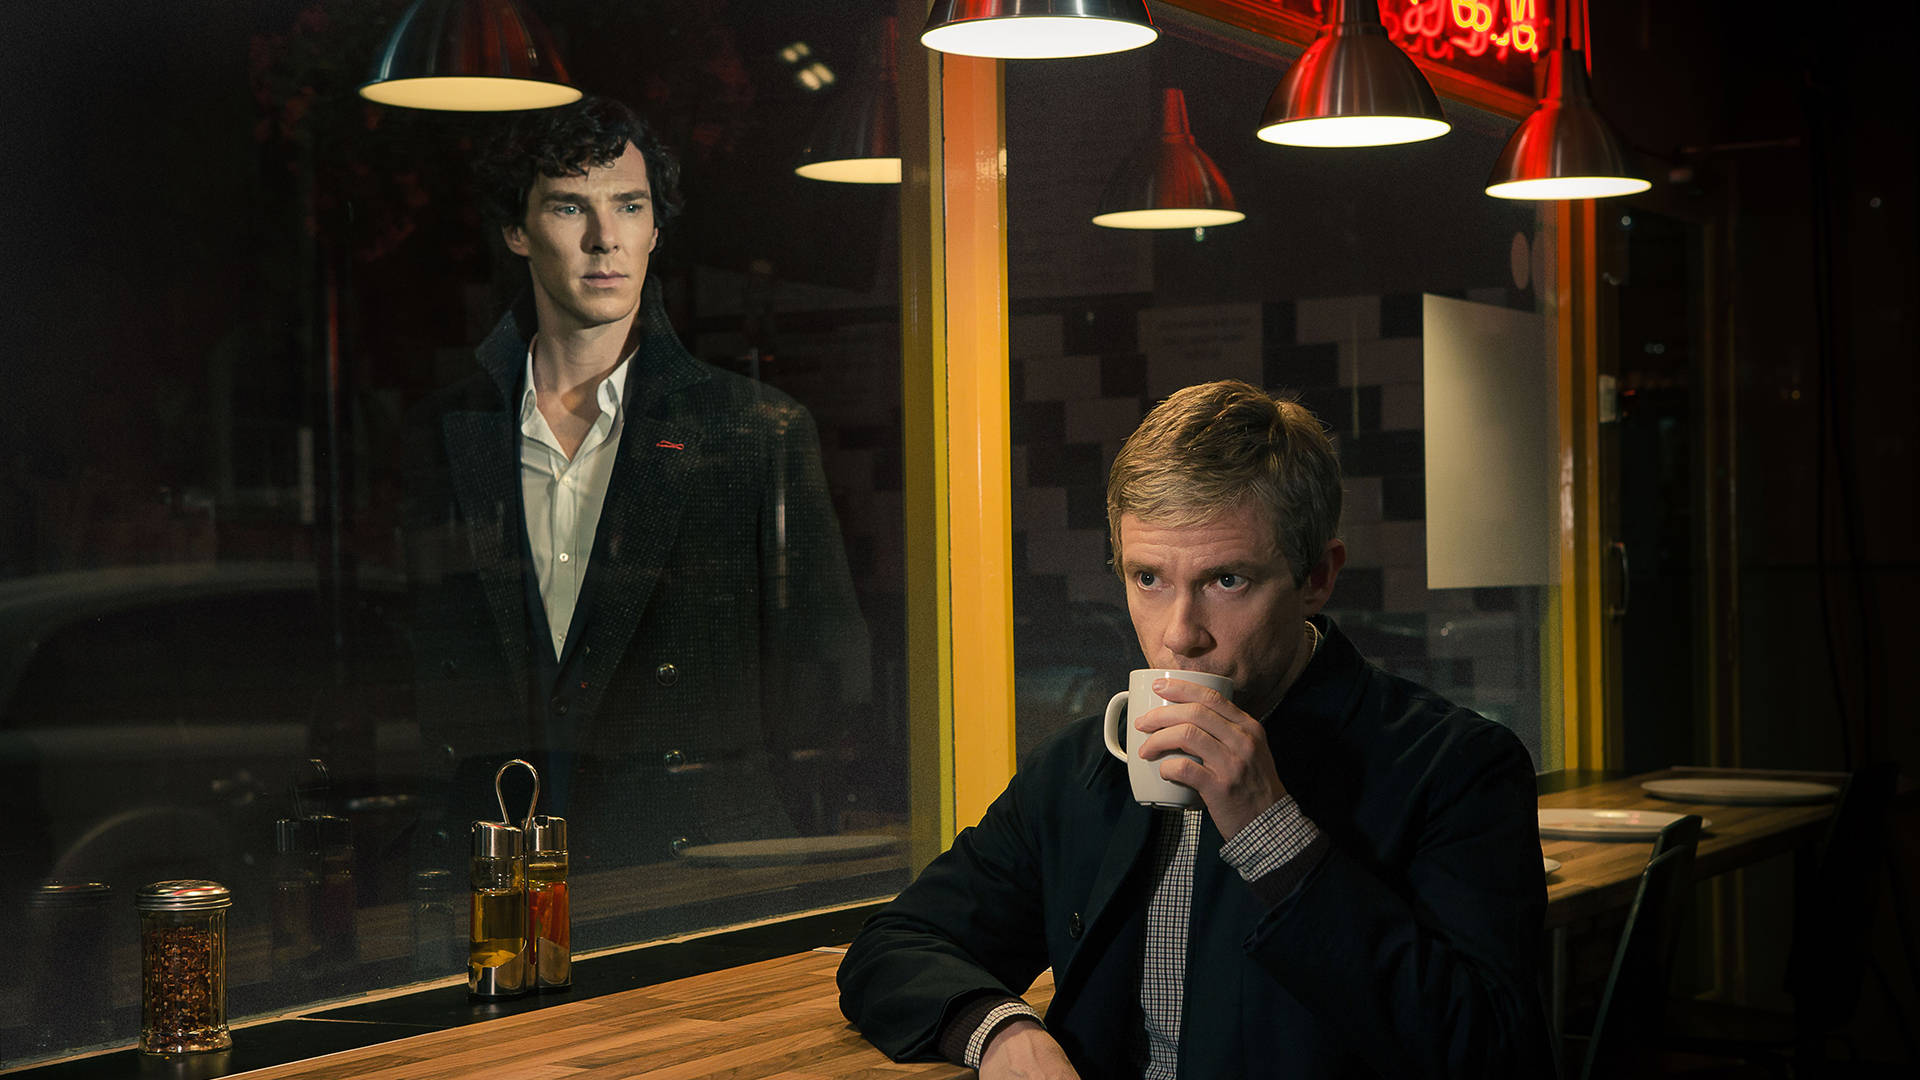 Sherlock John Watson At Diner Background